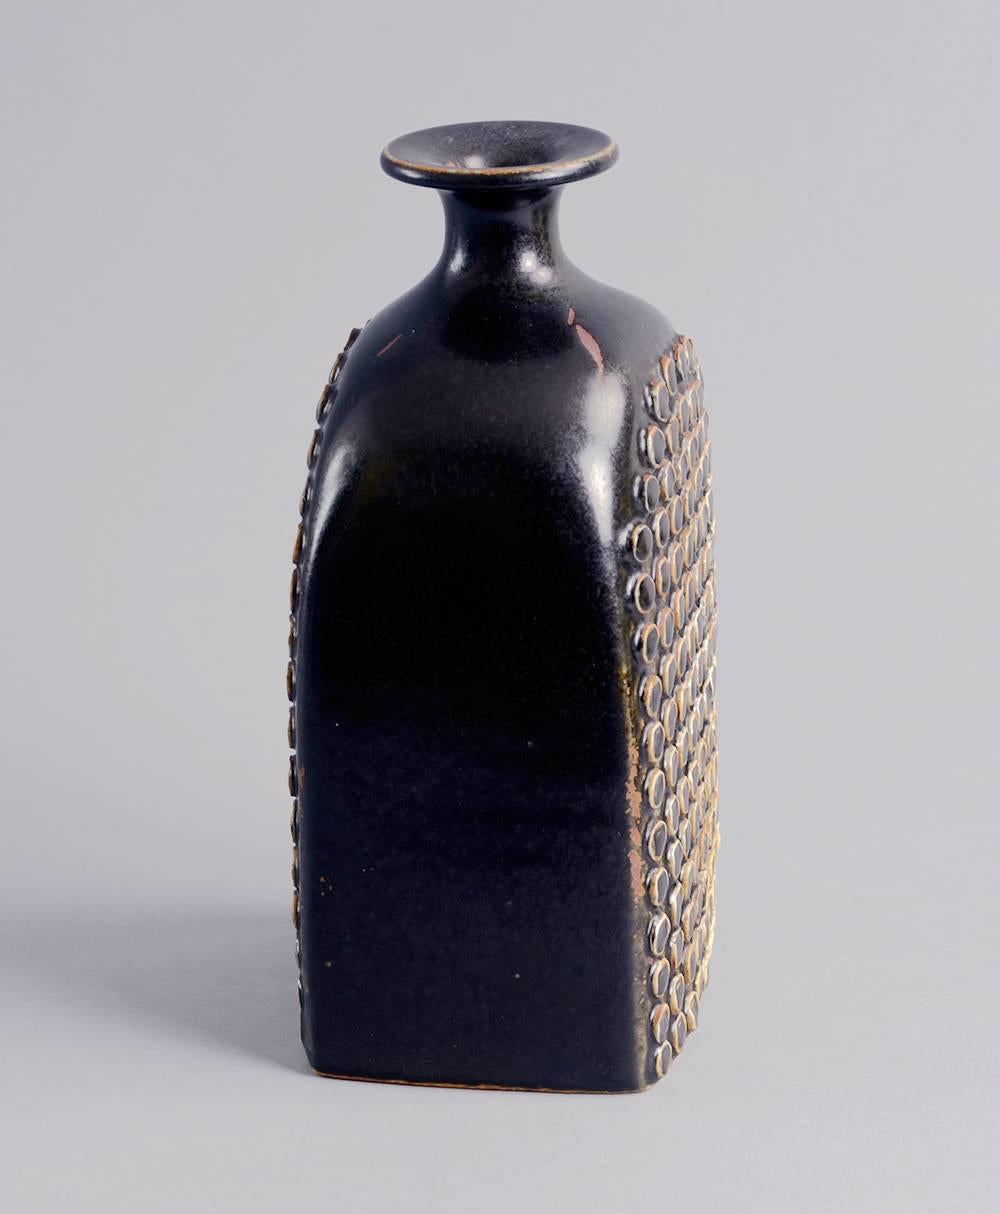 Scandinavian Modern Bottle Vase with Brown Glaze by Stig Lindberg for Gustavsberg